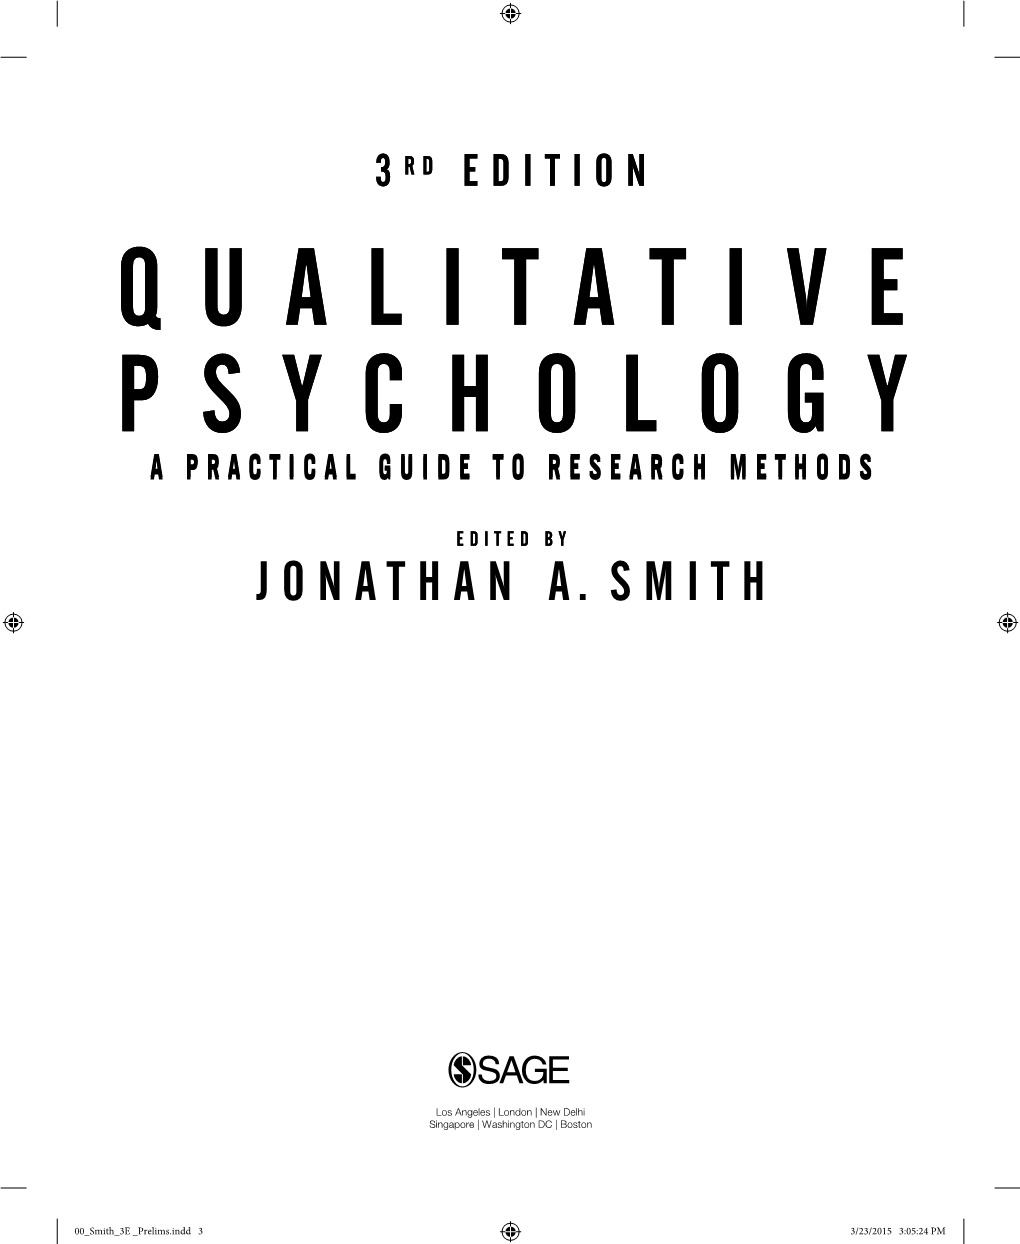 Qualitative Psychology: Grounded Theory